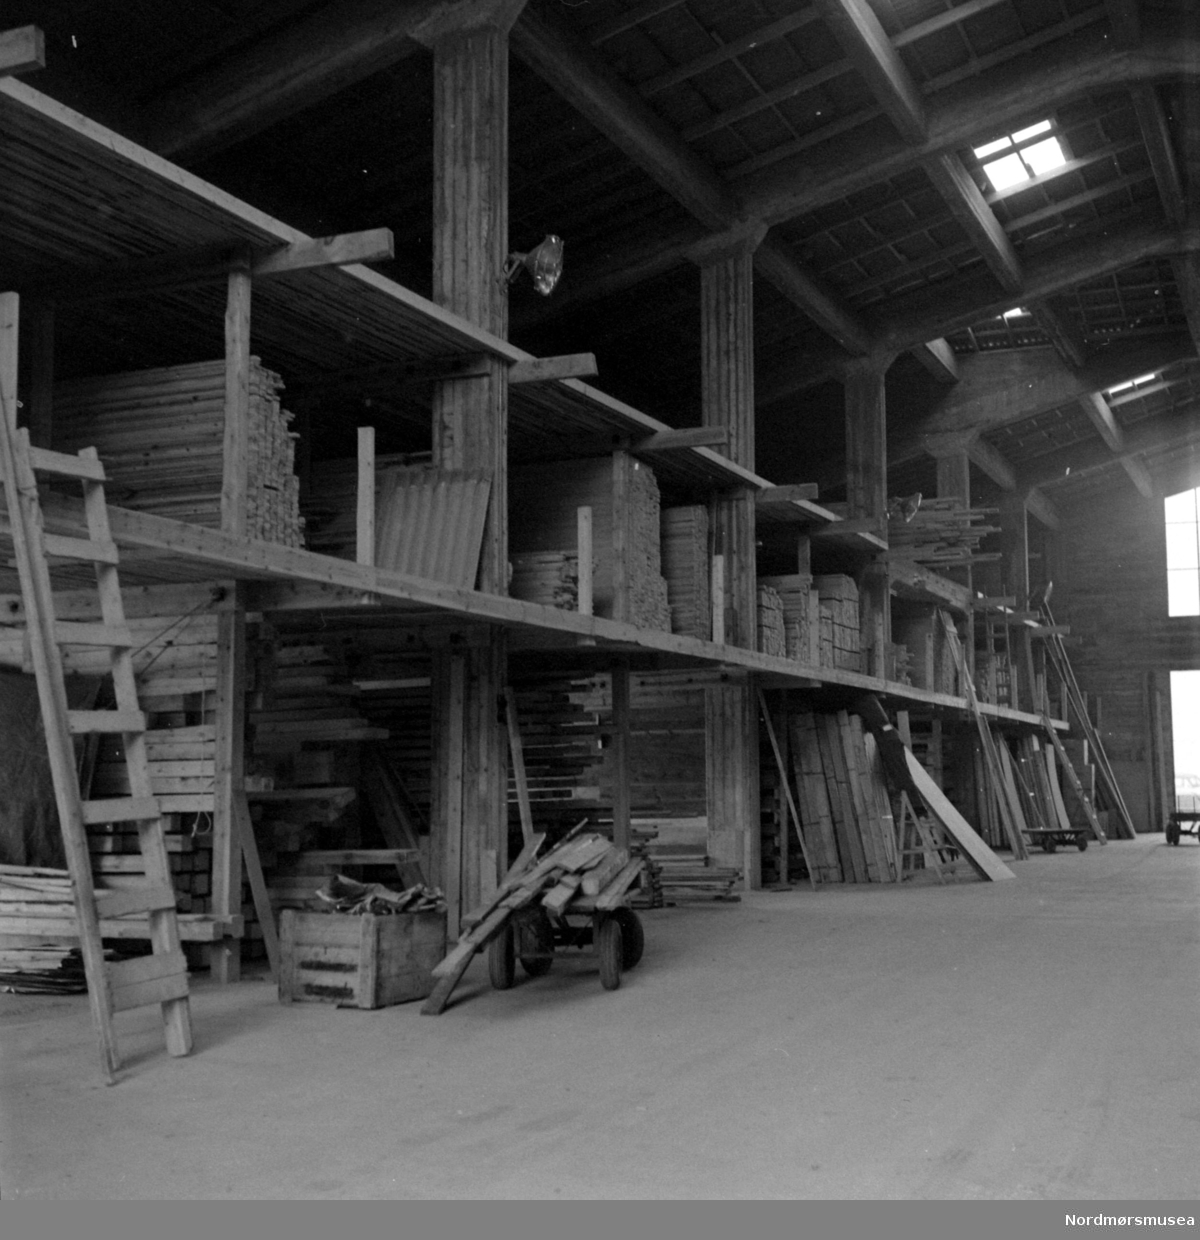 Foto fra Storvik Mekaniske verksted i Kristiansund, hvor vi ser blant annet fra fartøyet Masi. Fotograf er Nils Williams. Fra Nordmøre museums fotosamlinger.